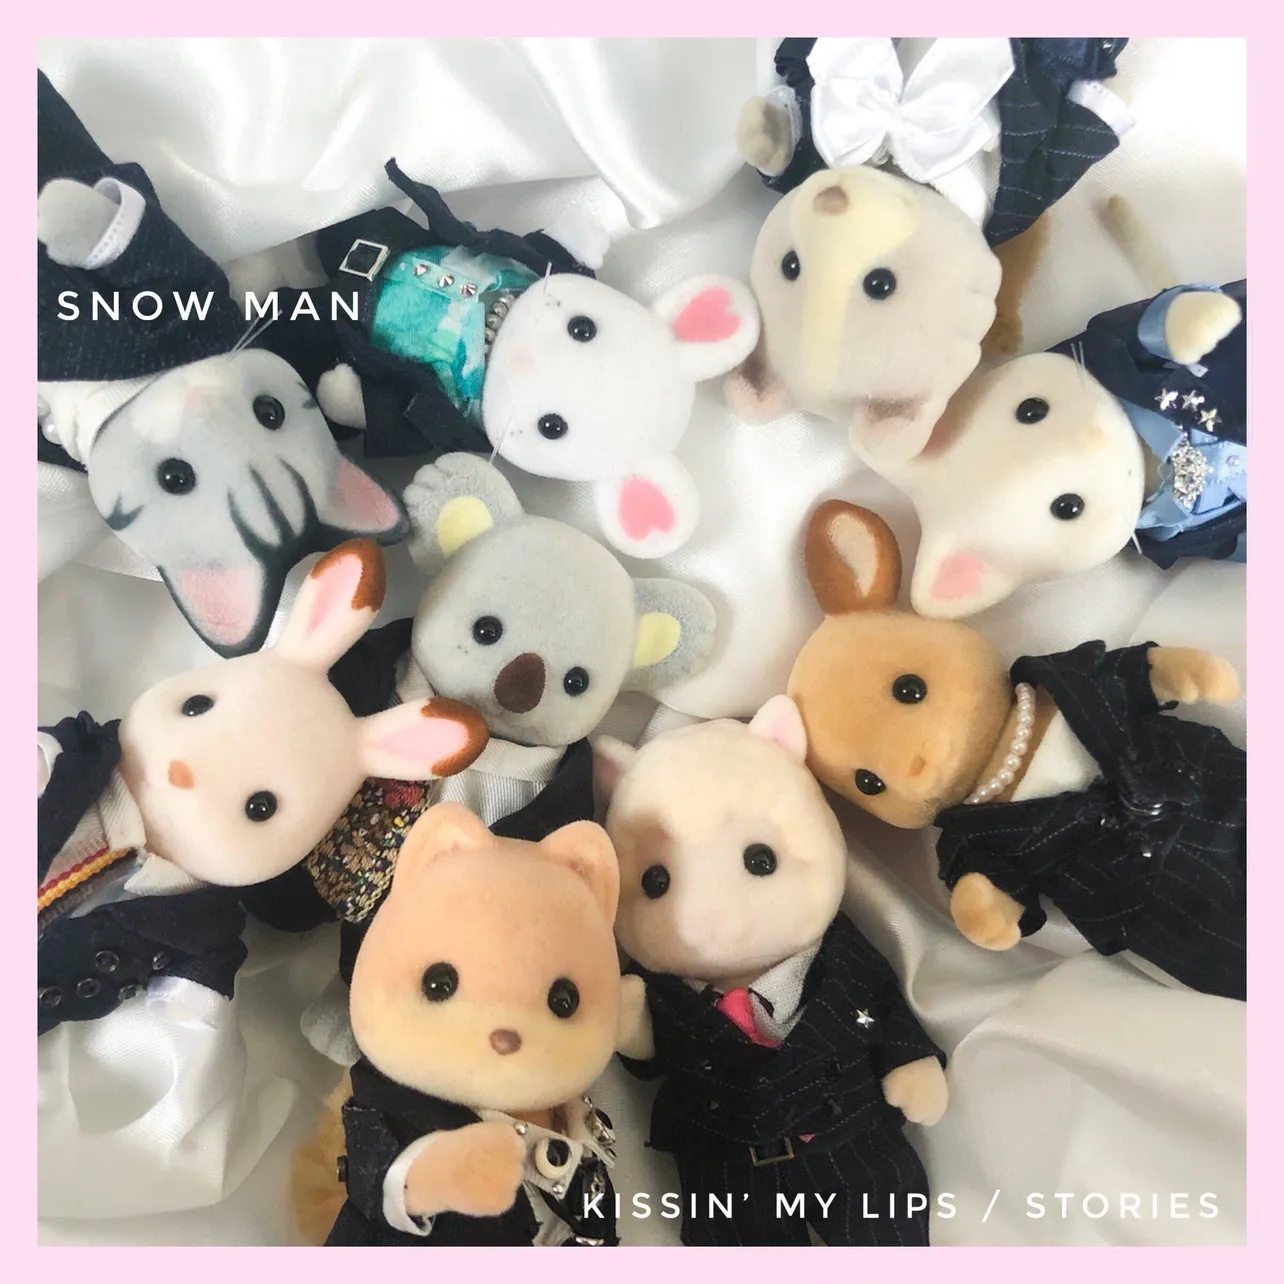 Snow Man 2ndシングル「KISSIN'MY LIPS/Stories」初回盤Aジャケットを再現